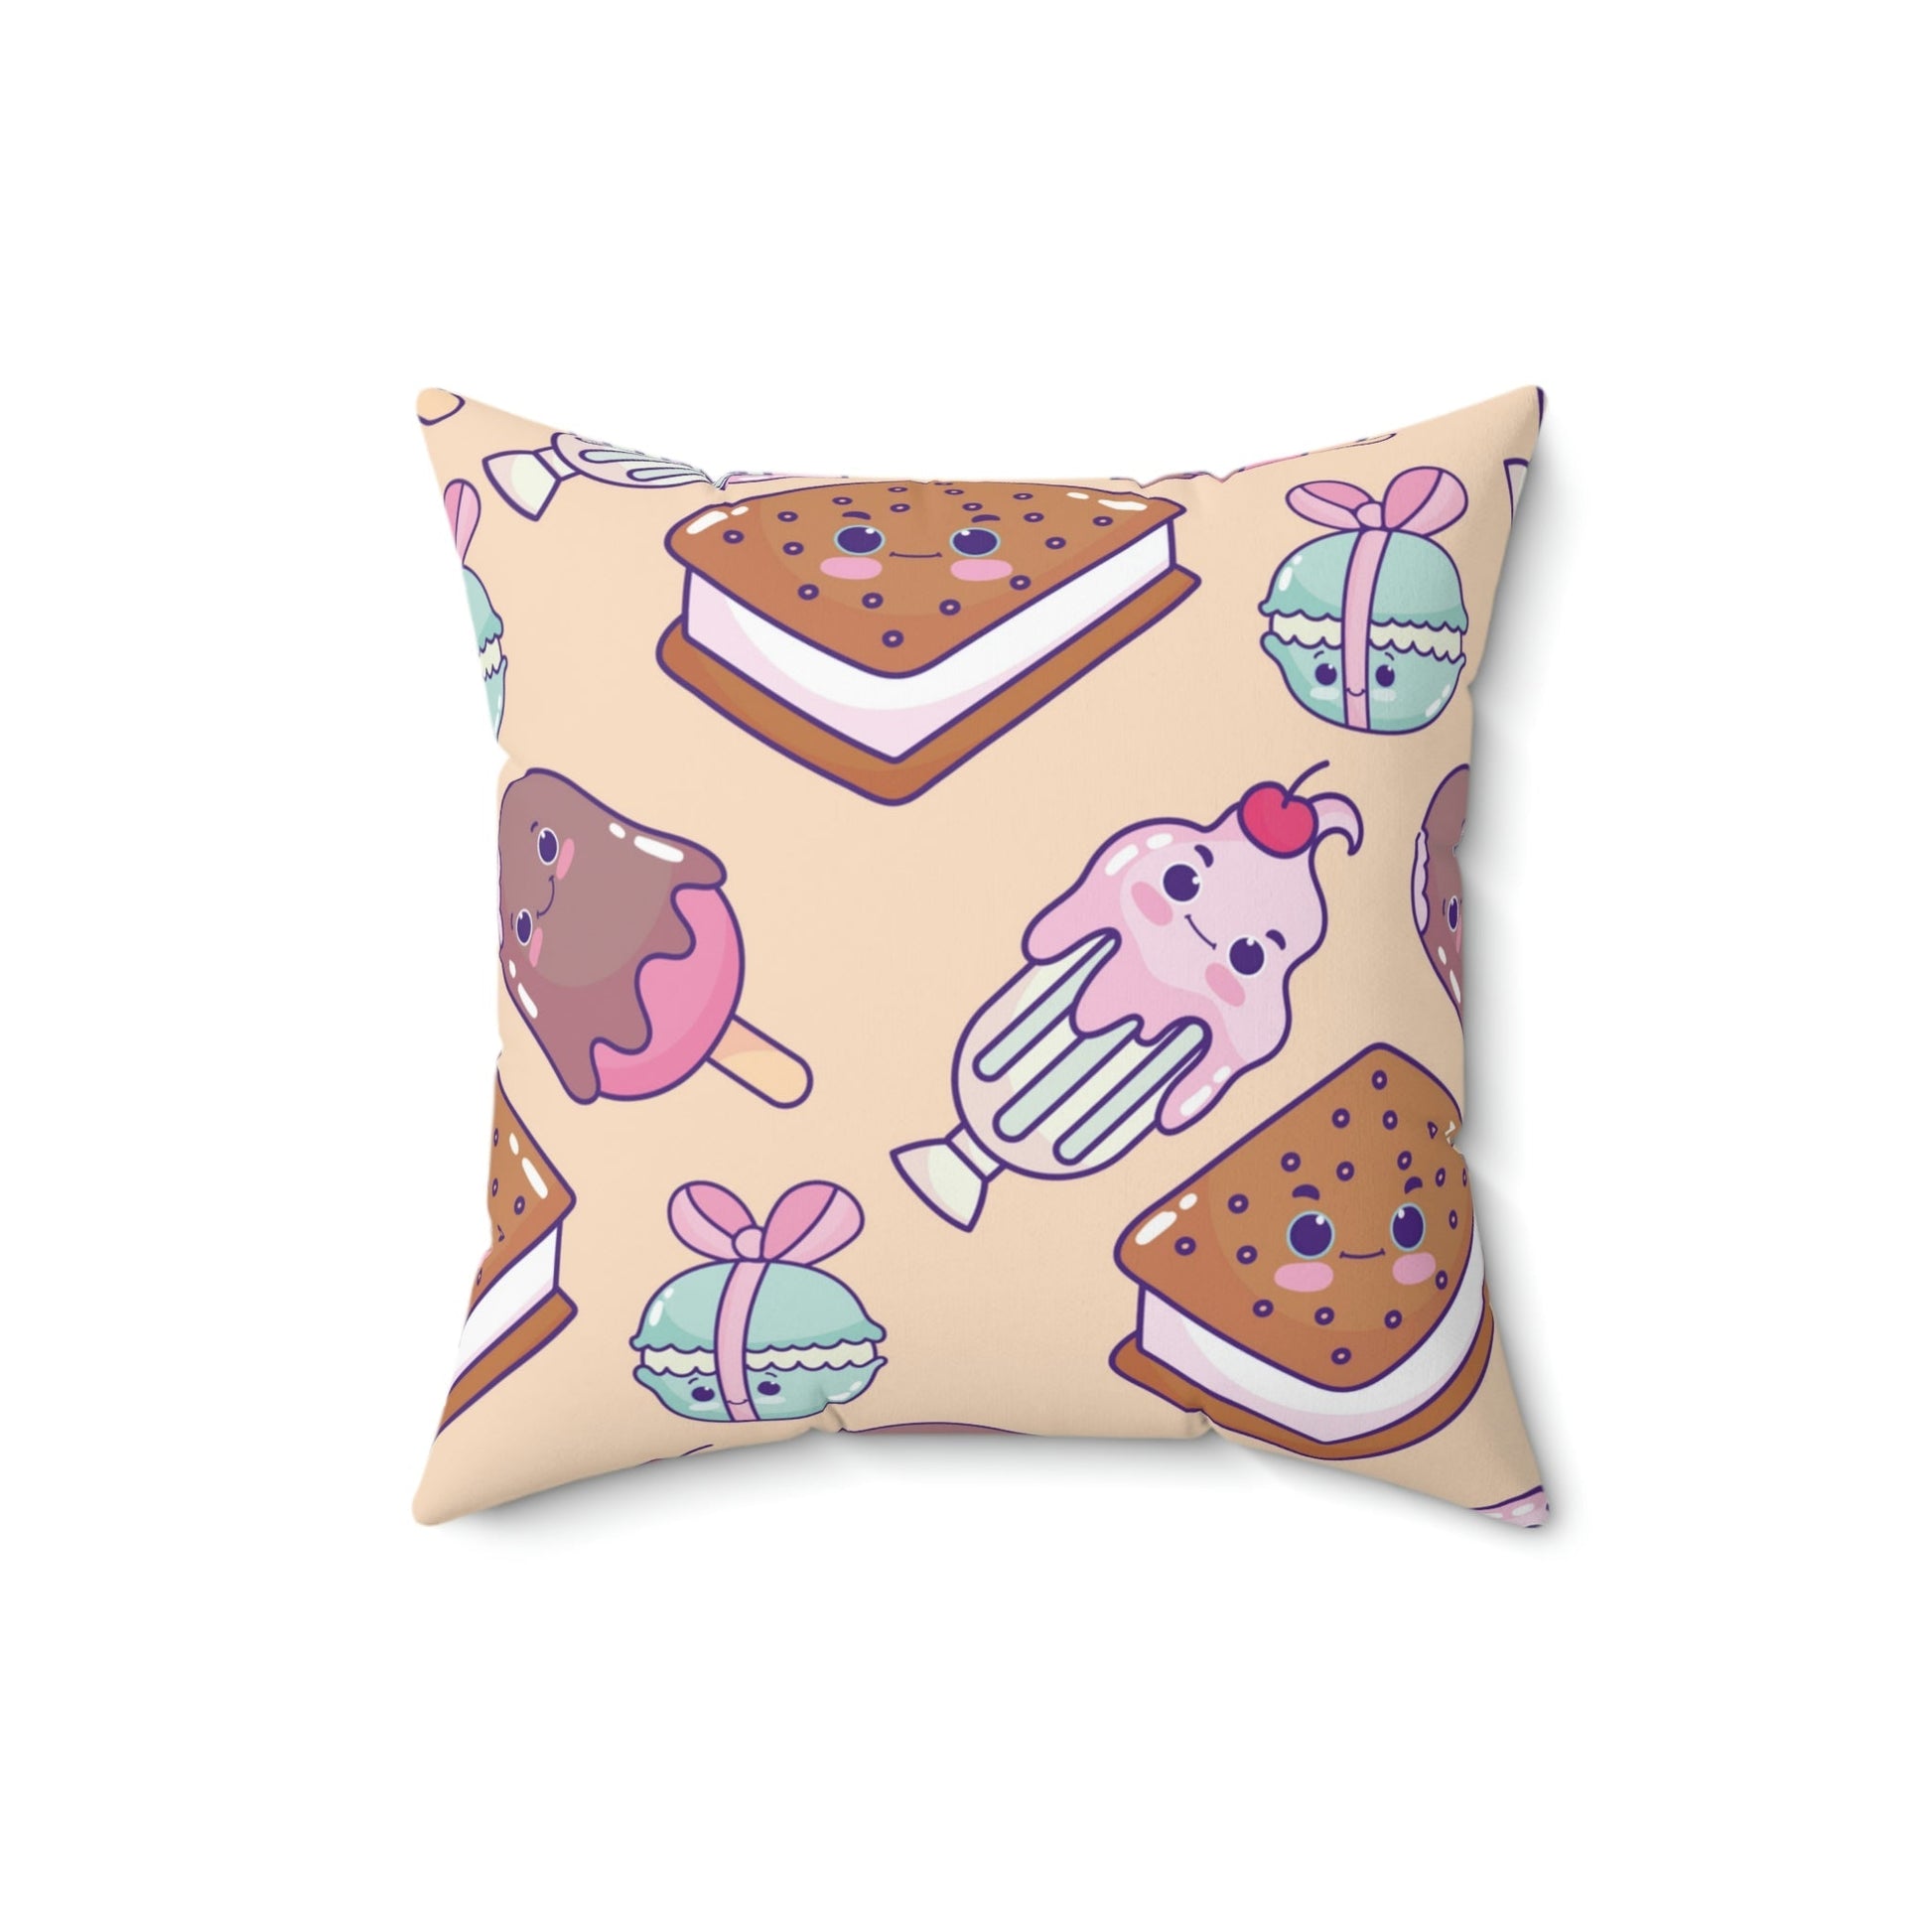 Kawaii Sweet Treats Square Pillow Home Decor Pink Sweetheart